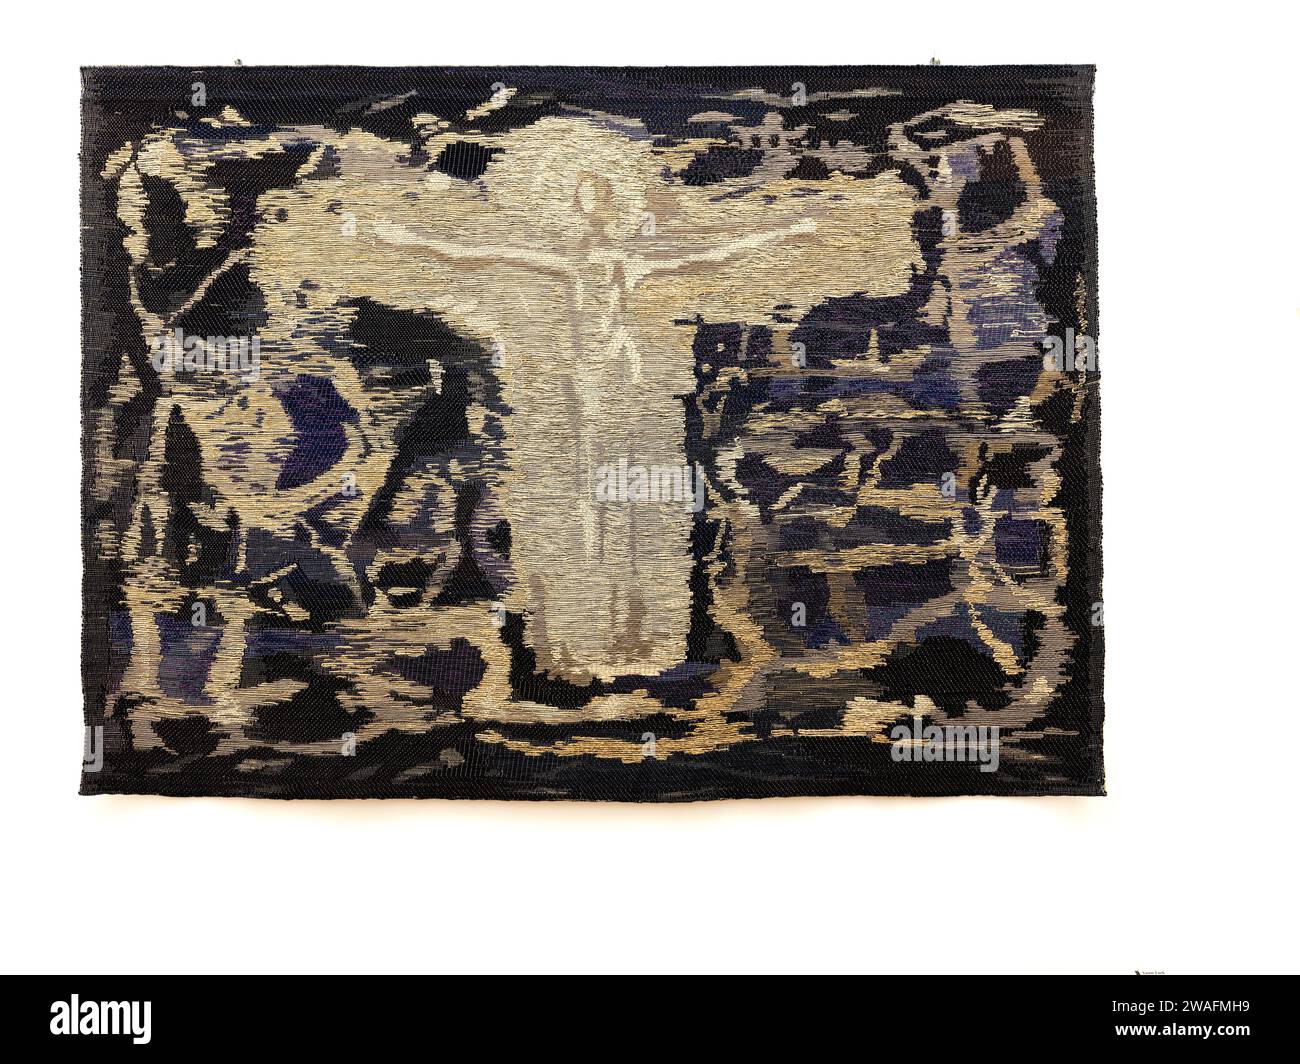 "Kreuzigung", von Leon Zack, Vatikanmuseum, Vatikanstadt, Rom, Italien. Stockfoto